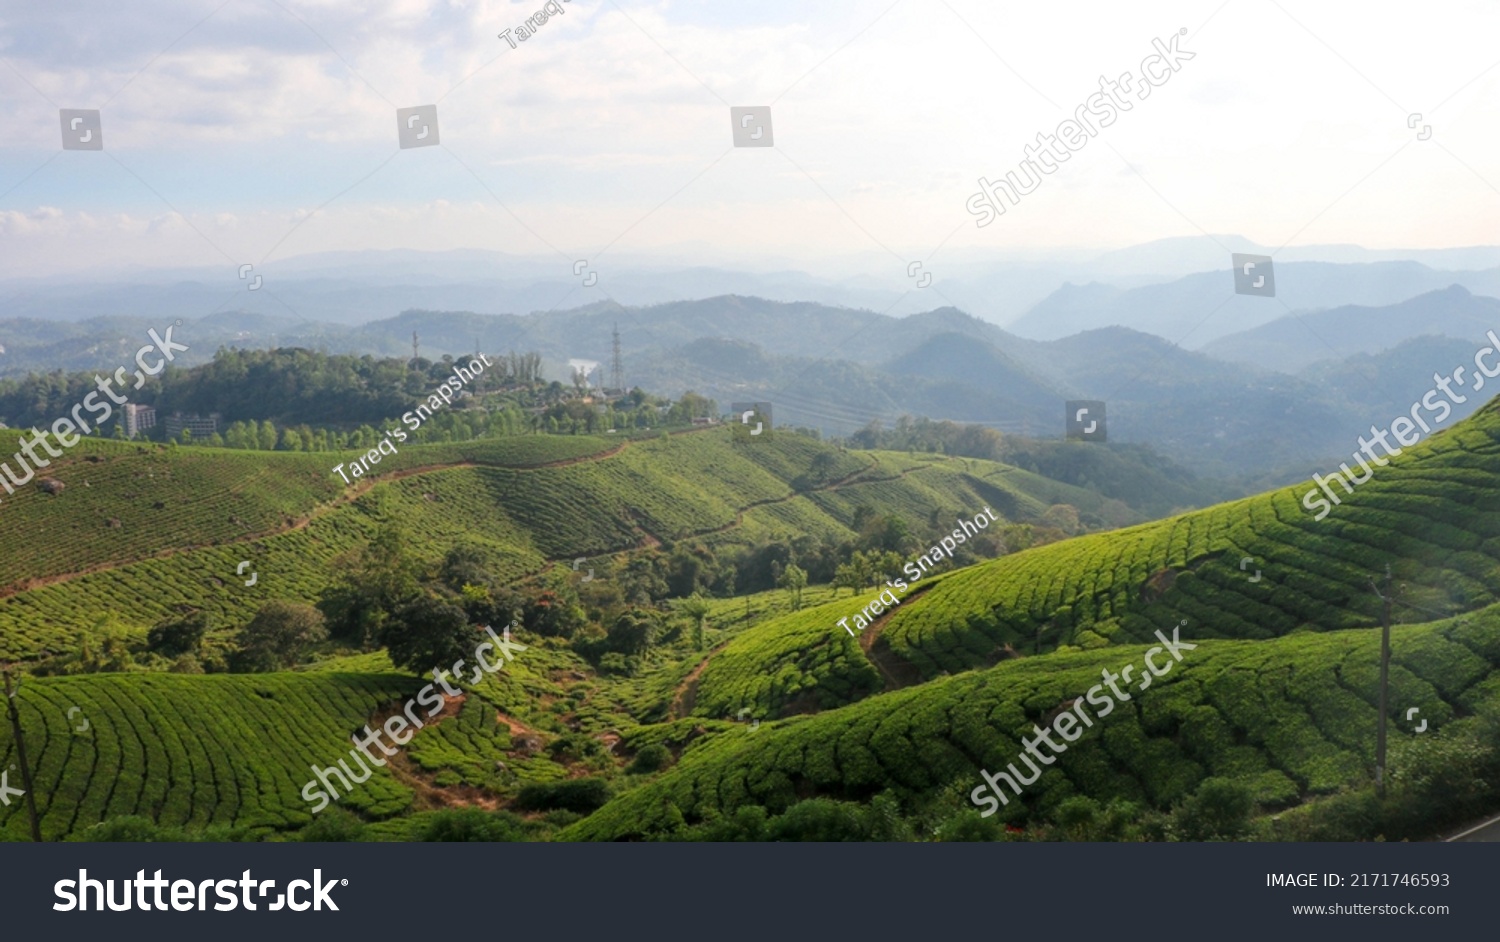 Amazing View of Tea Garden from Kannan Devan Hills, Munnar, Kerala, India #2171746593